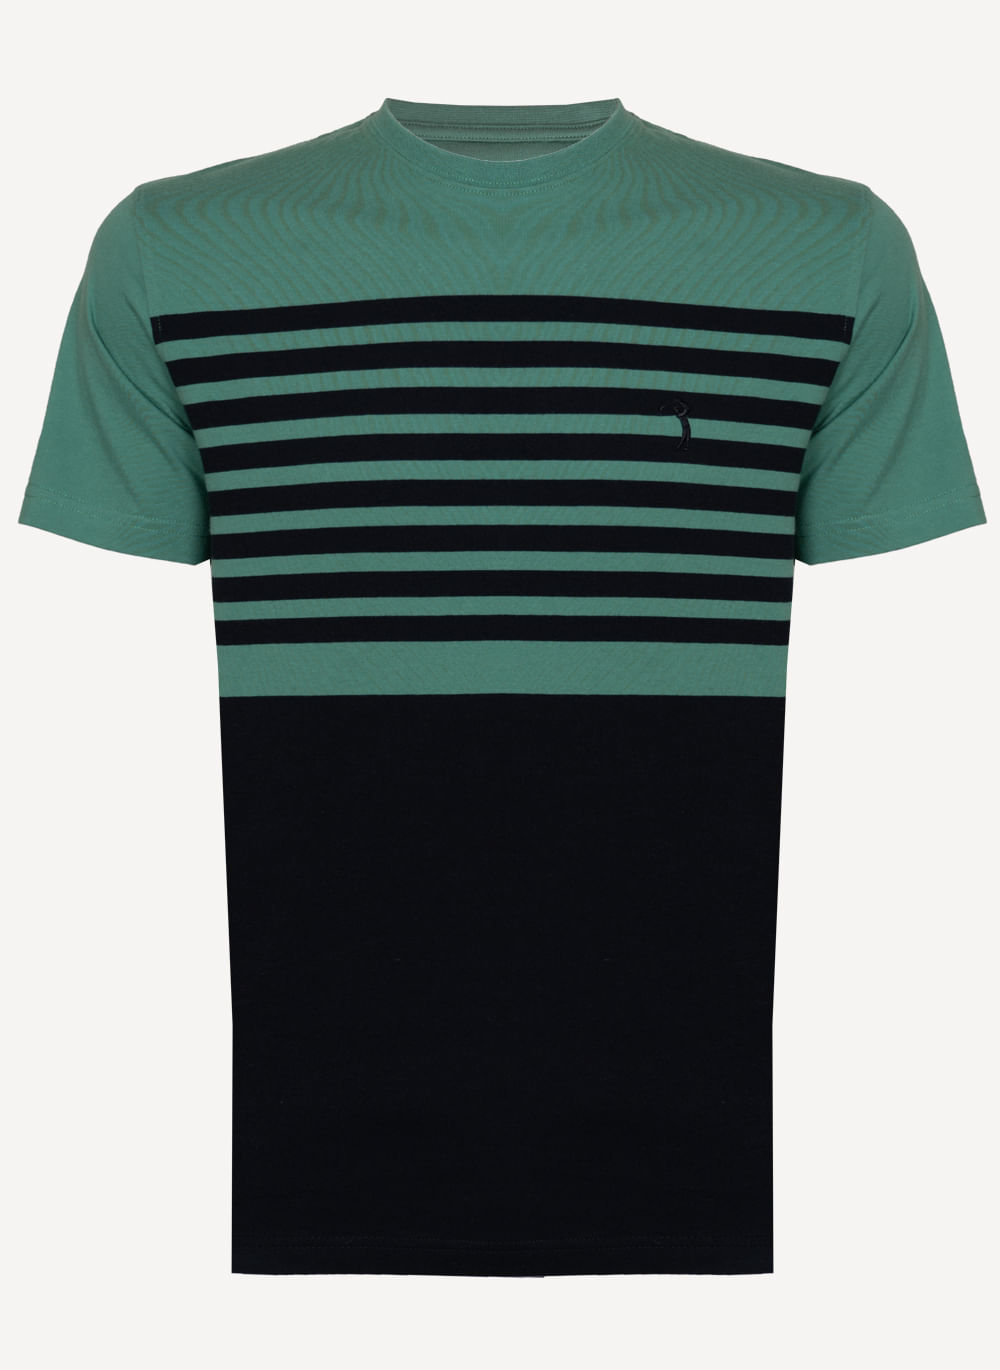 Camiseta-Aleatory-Listrada-Force-Verde-Verde-XGG